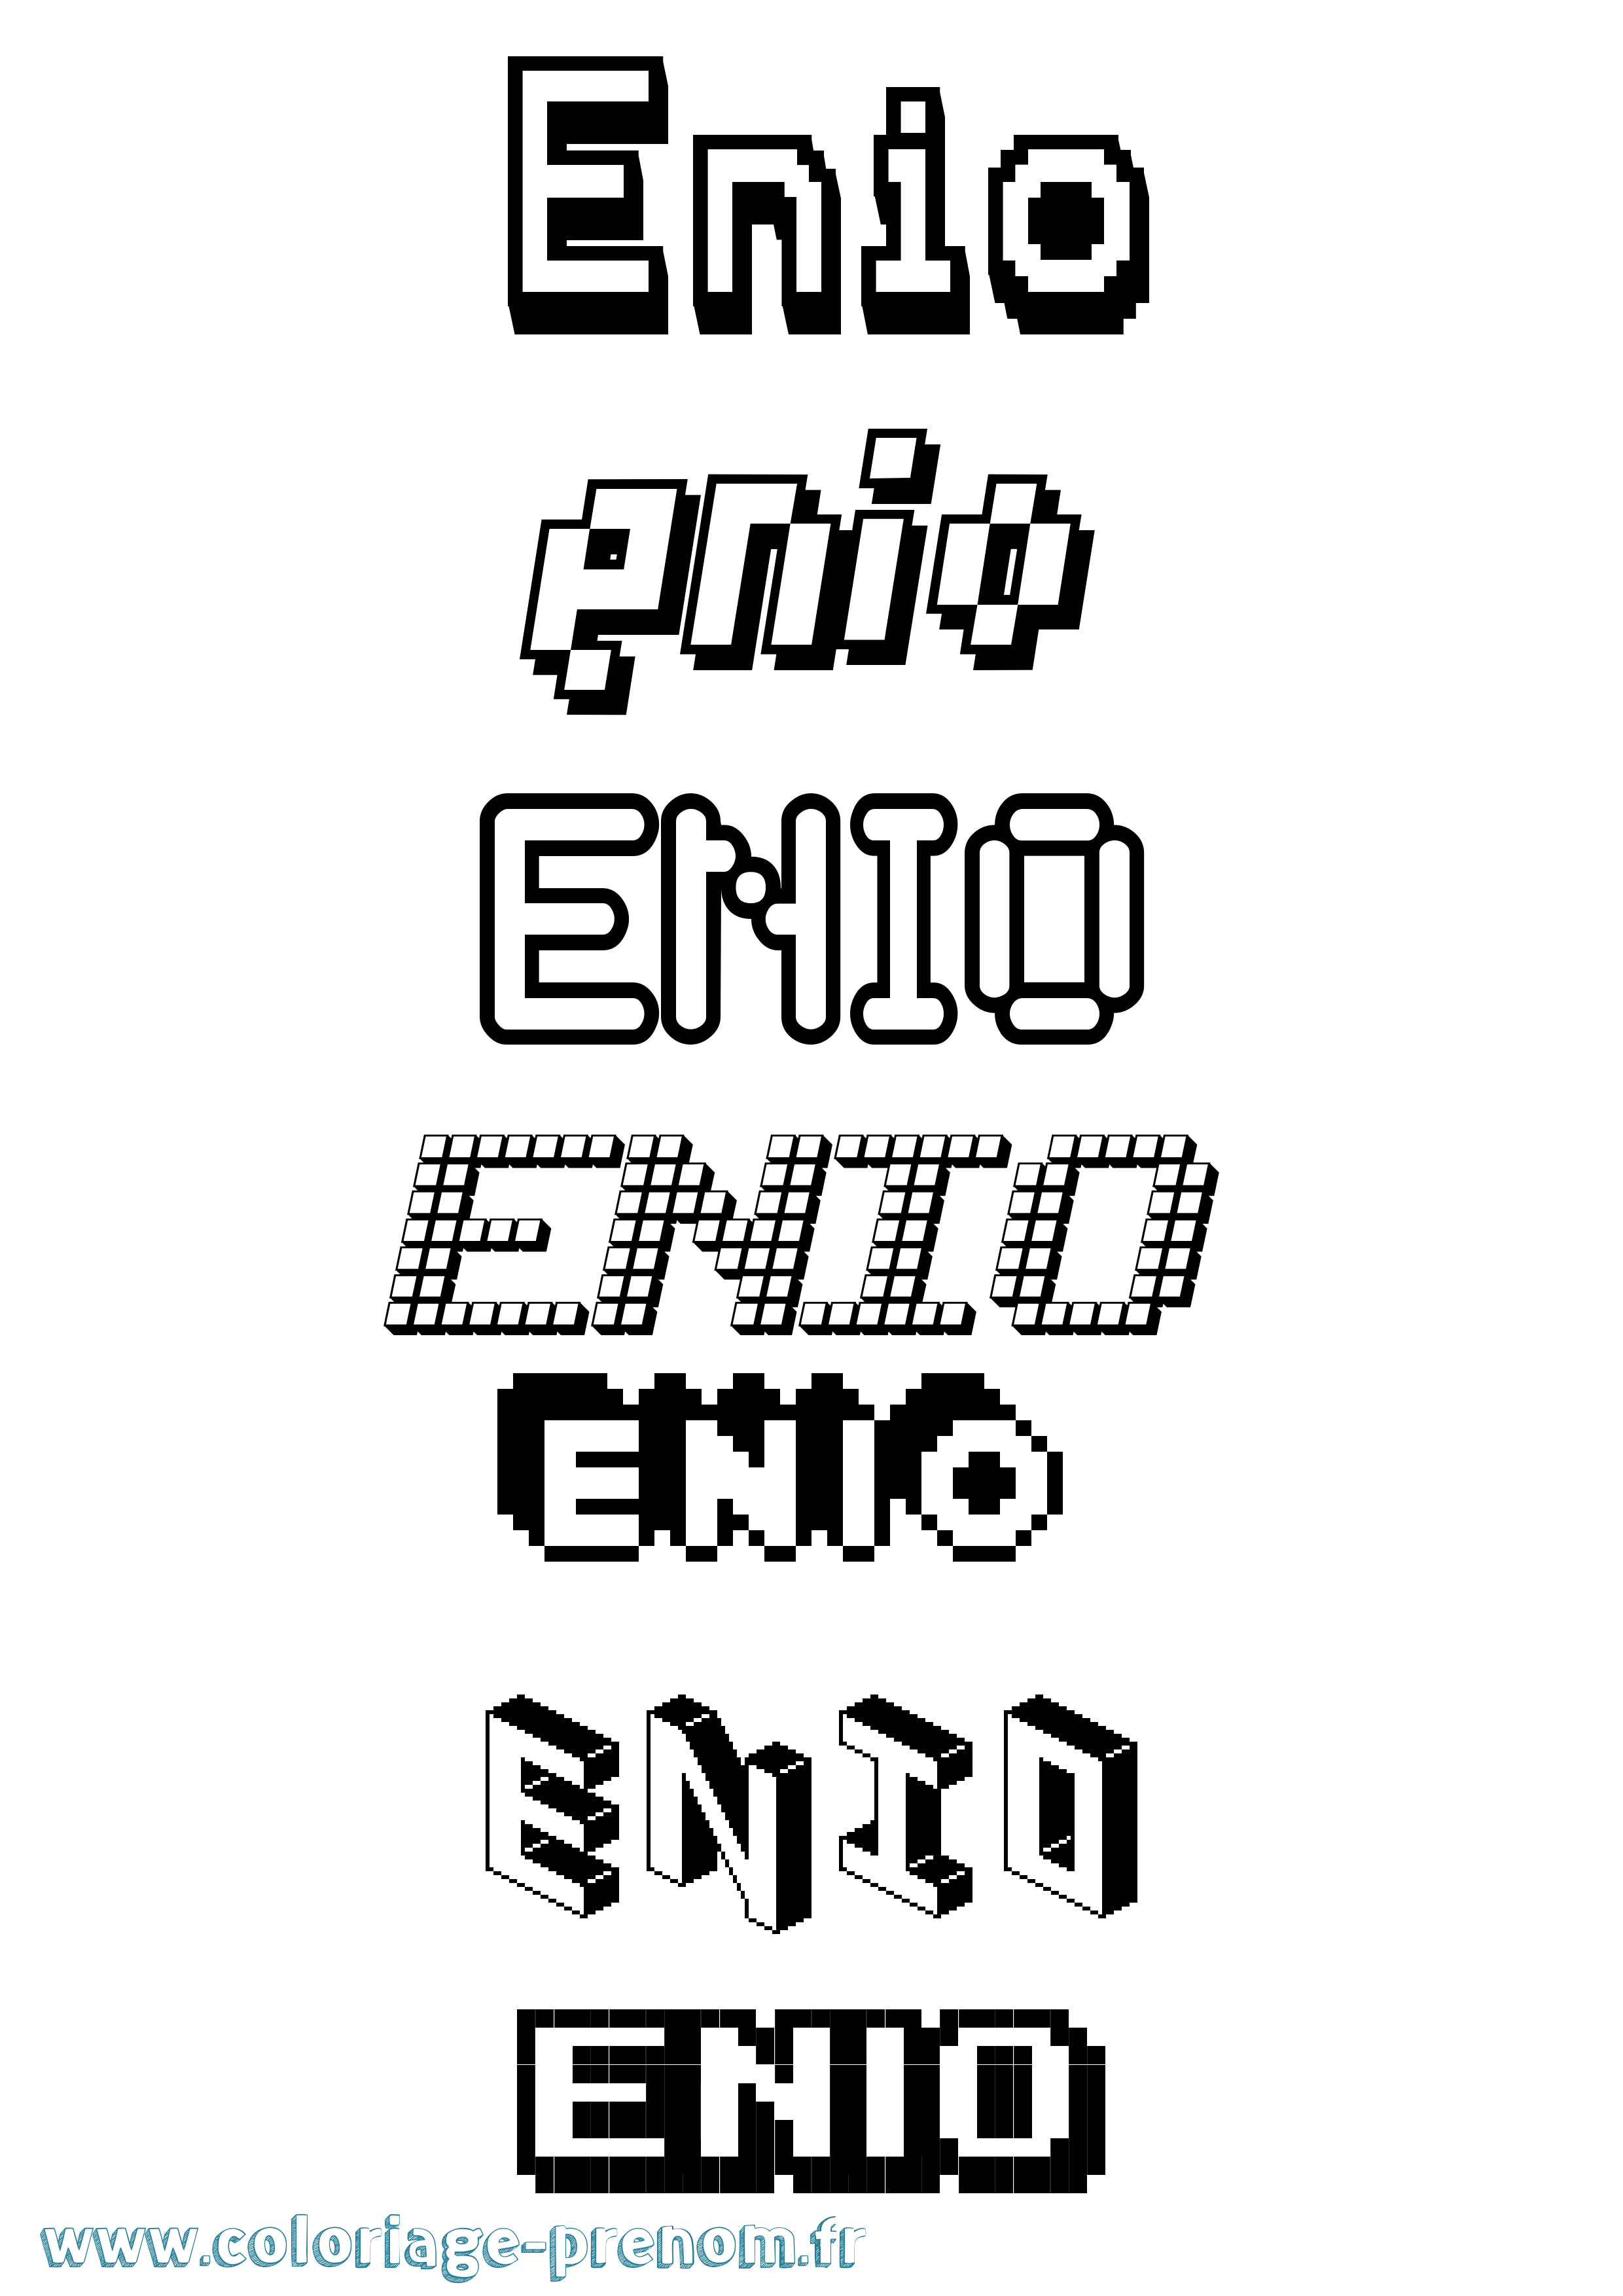 Coloriage prénom Enio Pixel